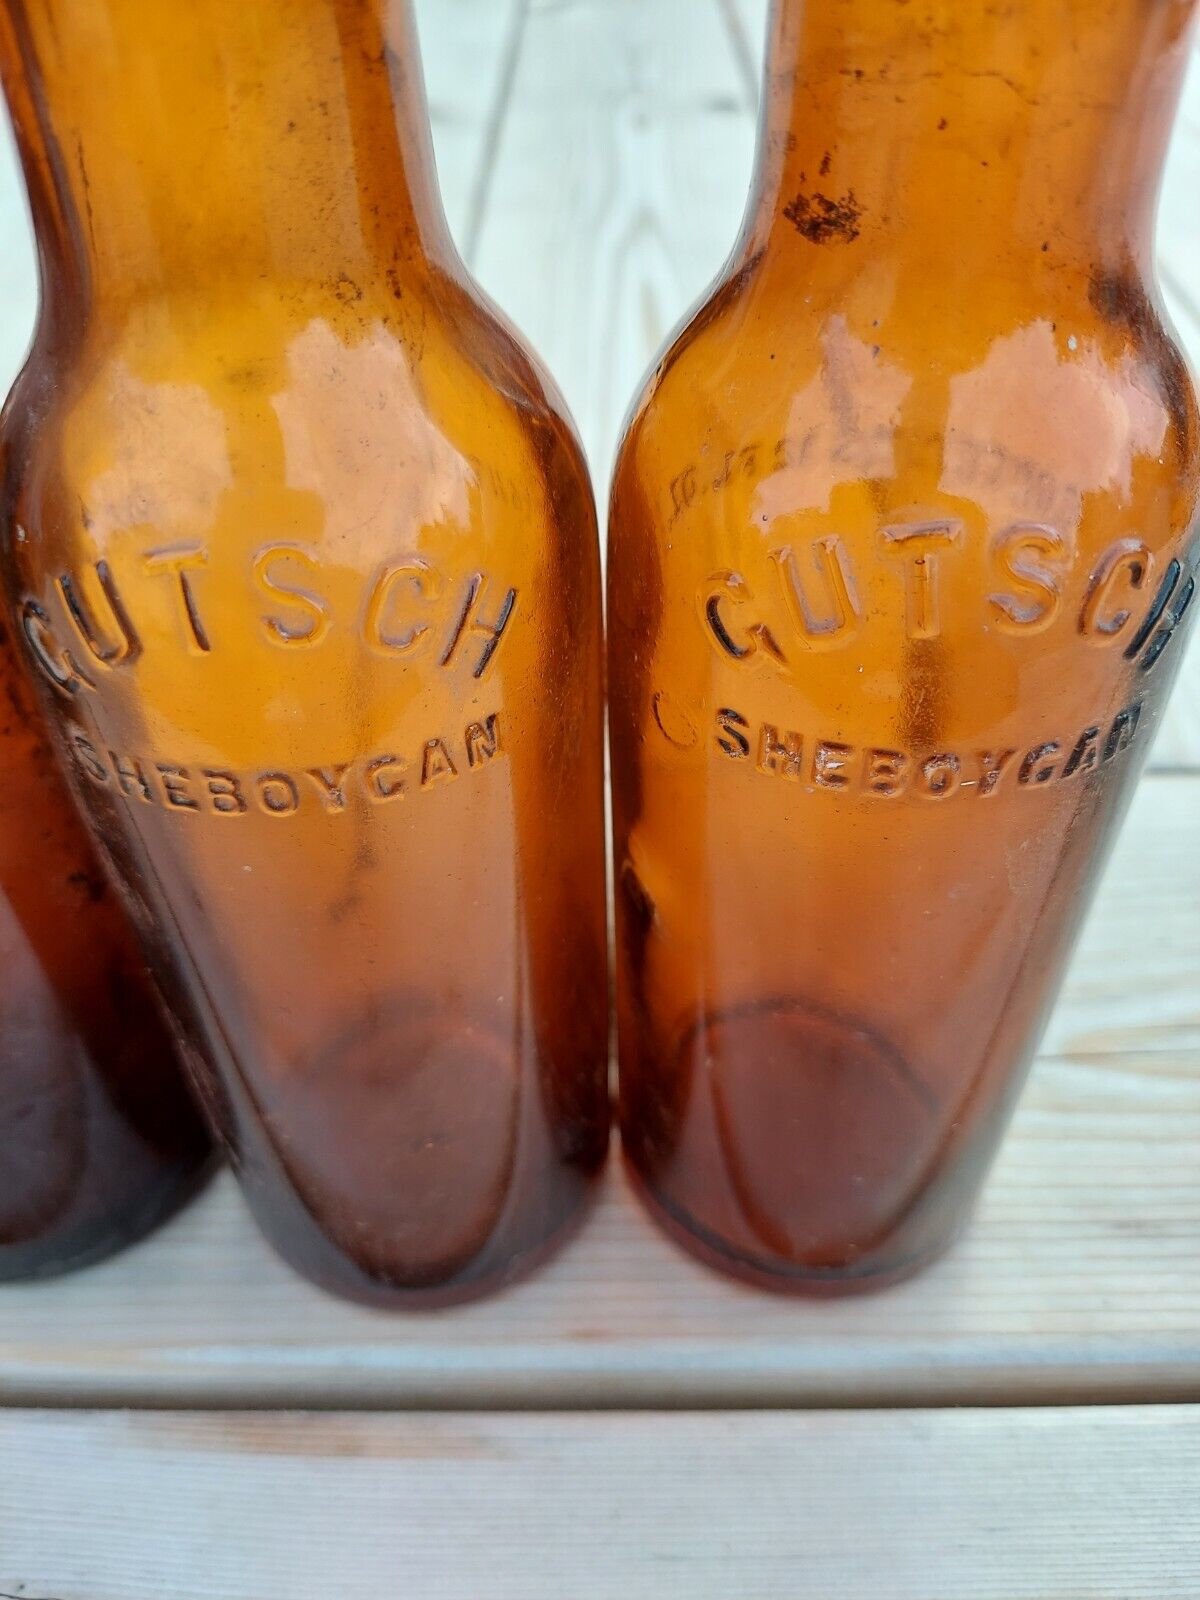 Gutsch Sheboygan Vintage Amber Glass 4 Beer Bottles Antique Bar Man Room 